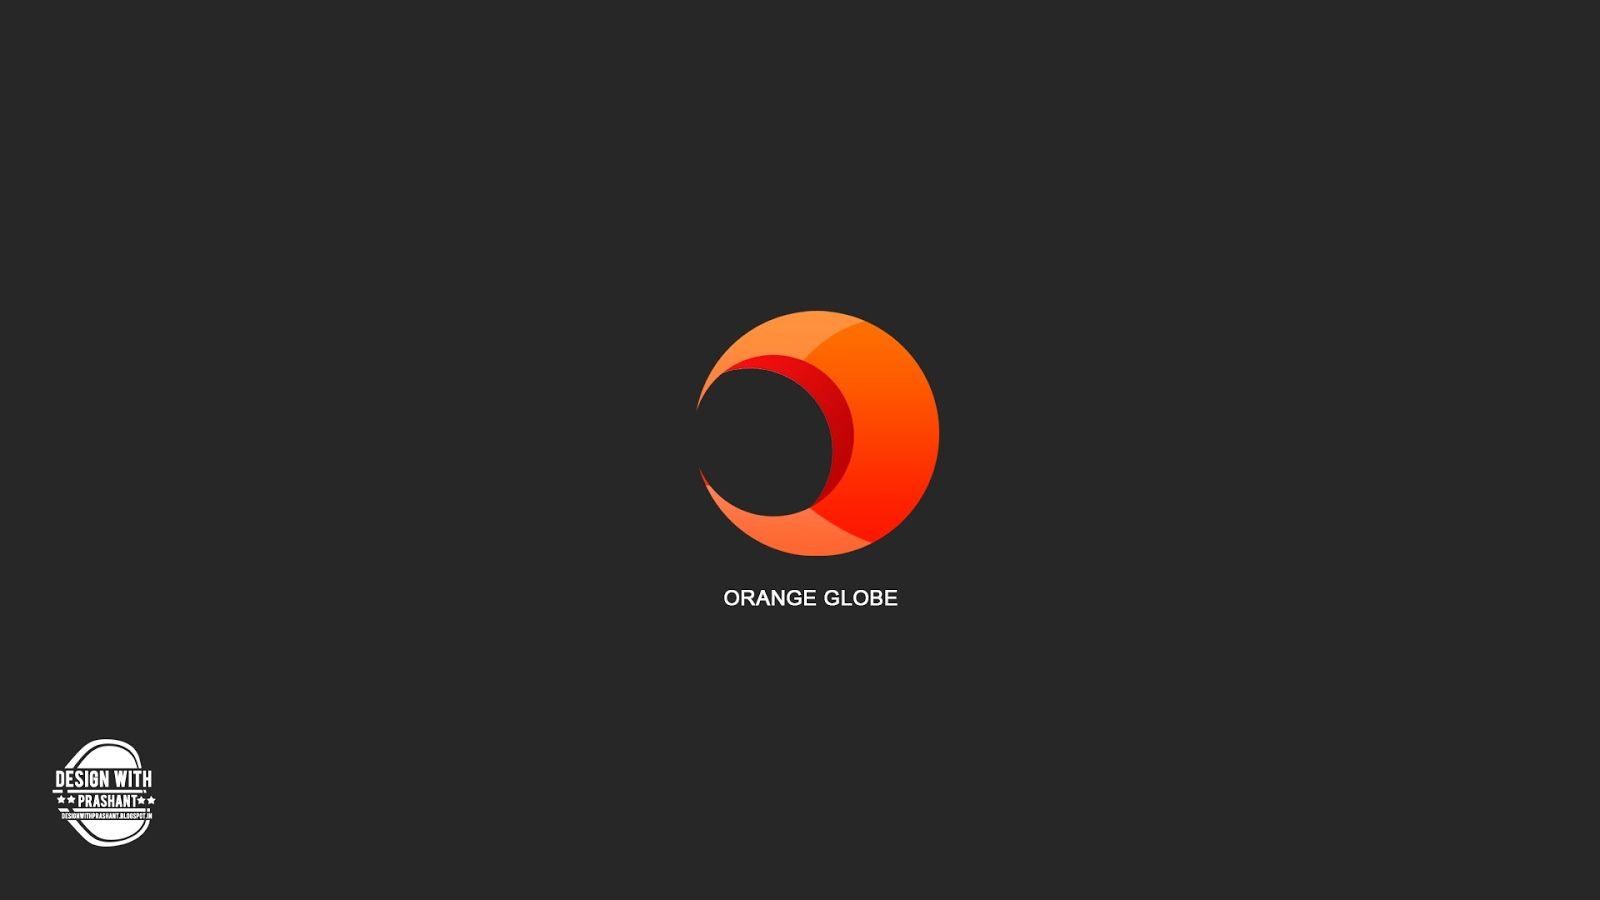 Orange Globe Logo - ORANGE GLOBE LOGO. DESIGN WITH PRASHANT WITH PRASHANT